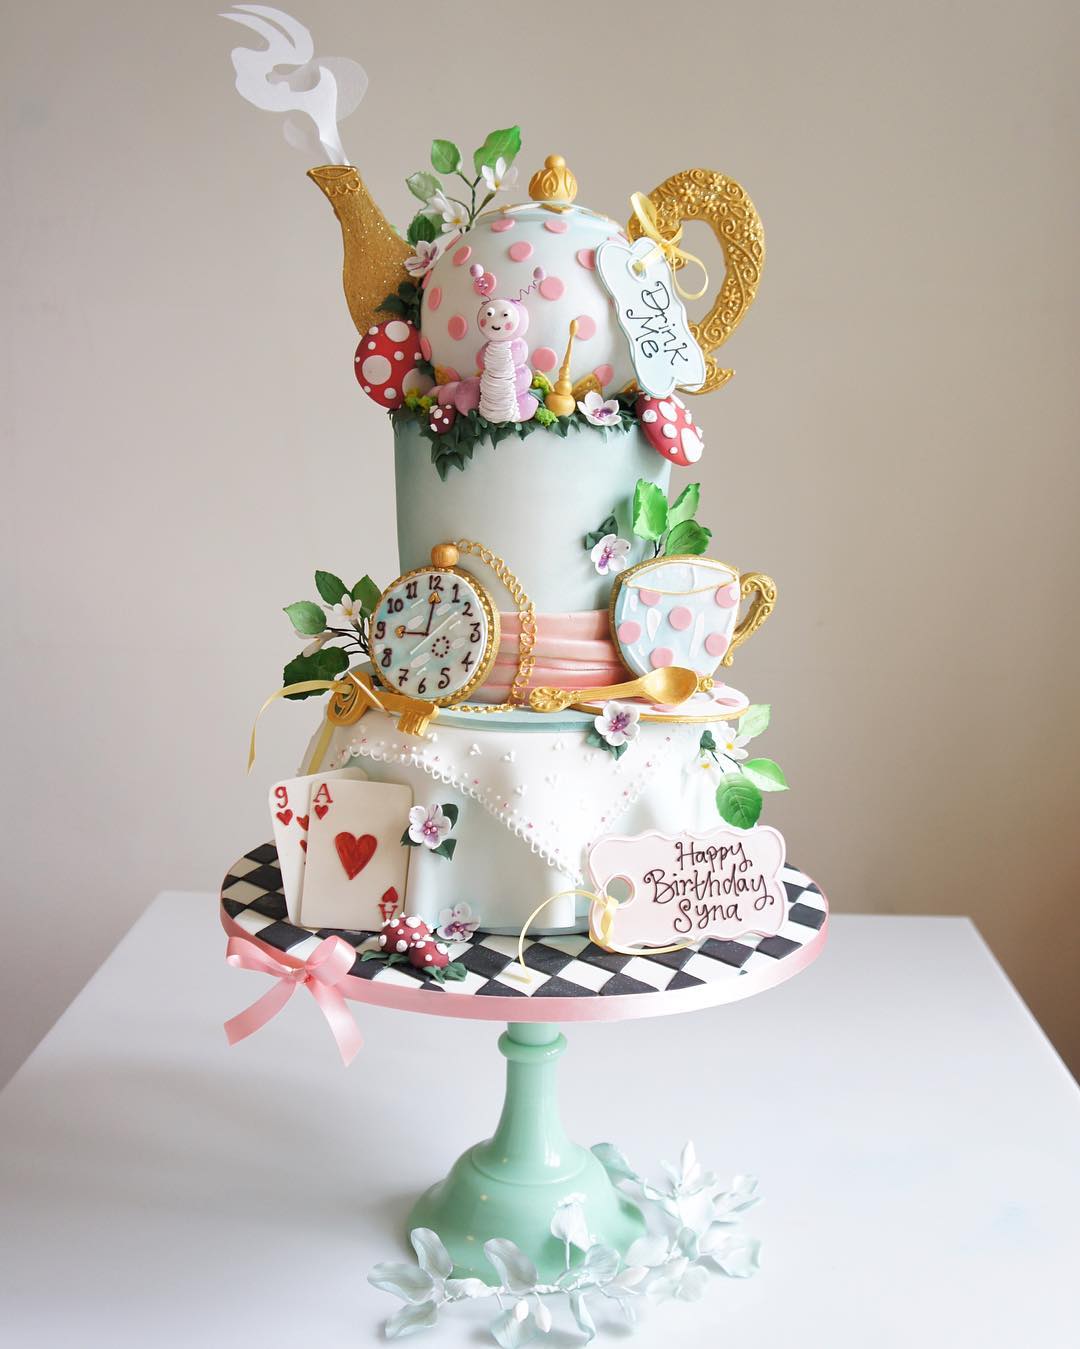 Cake boutique - Alice in Wonderland birthday cake!! #cake_boutique_corfu  #cakeporn #foodporn #cakestagram #instacake #cakedecorating #cakeideas  #cakedesign #fondant #fondantcake #cakeart #cakeartist #aliceinwonderland # birthday #cake #birthdaycake ...